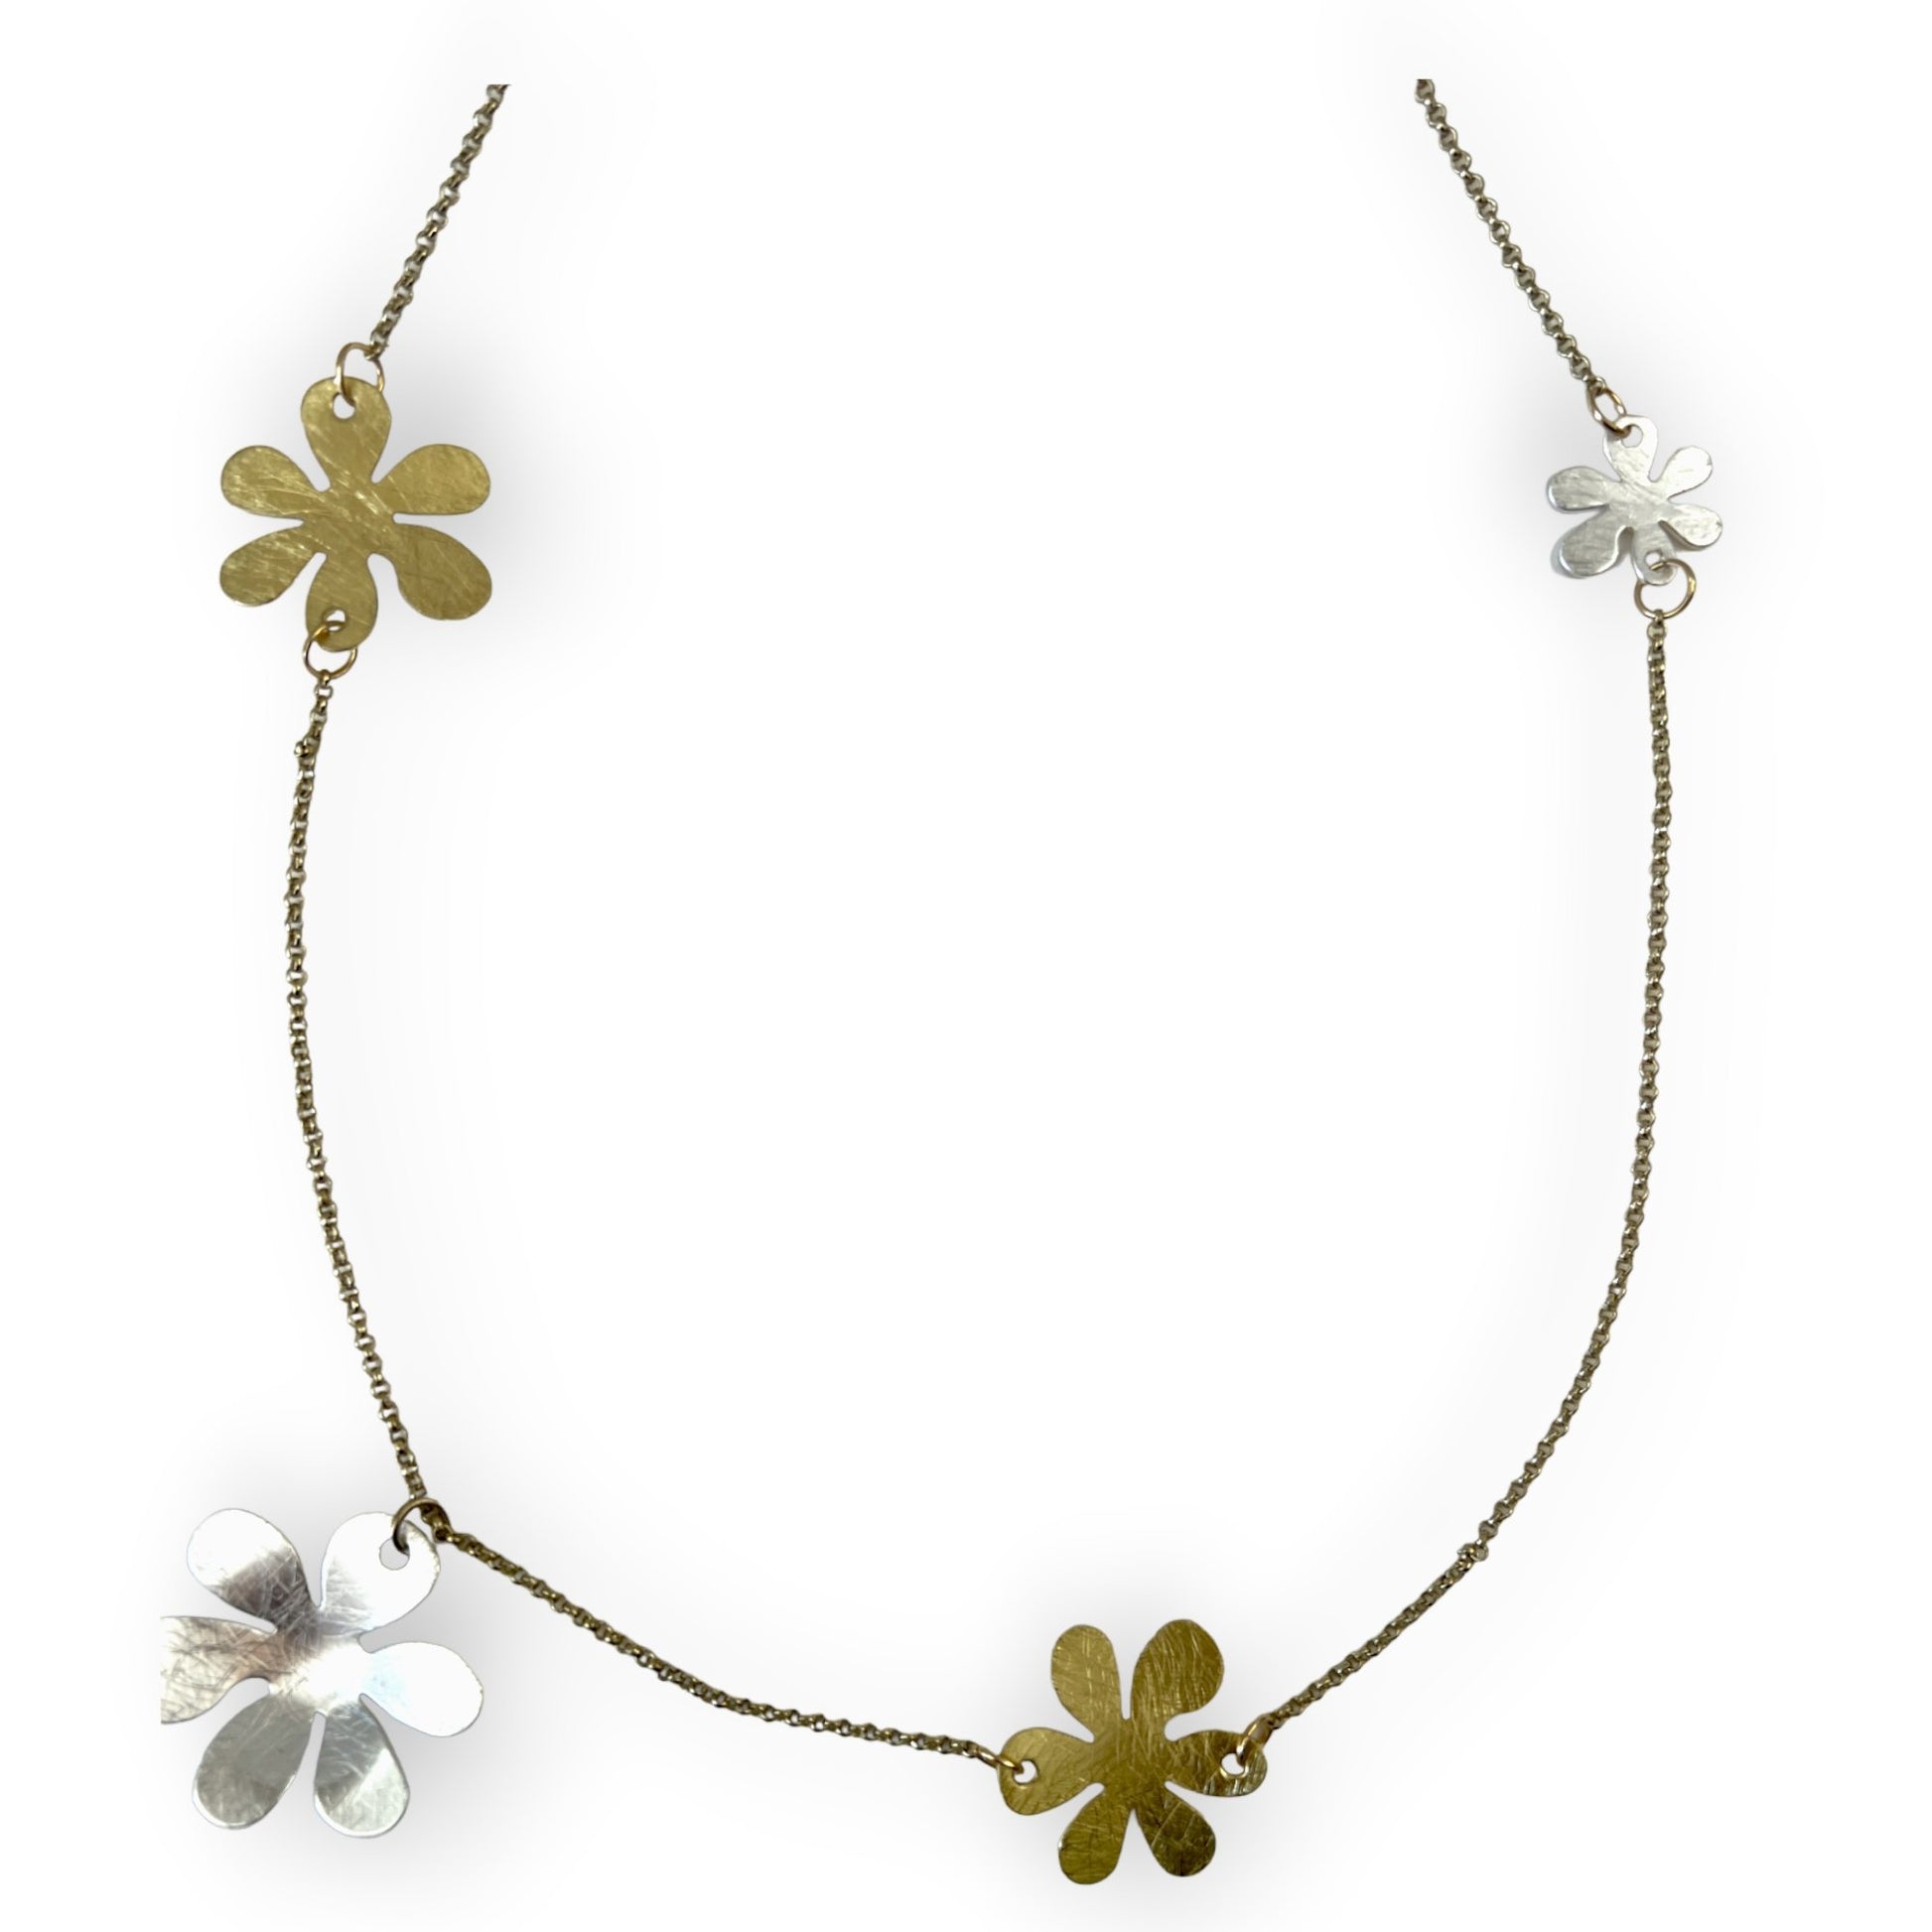 Flower motif metal chain necklace for a modern feel - Sundara Joon